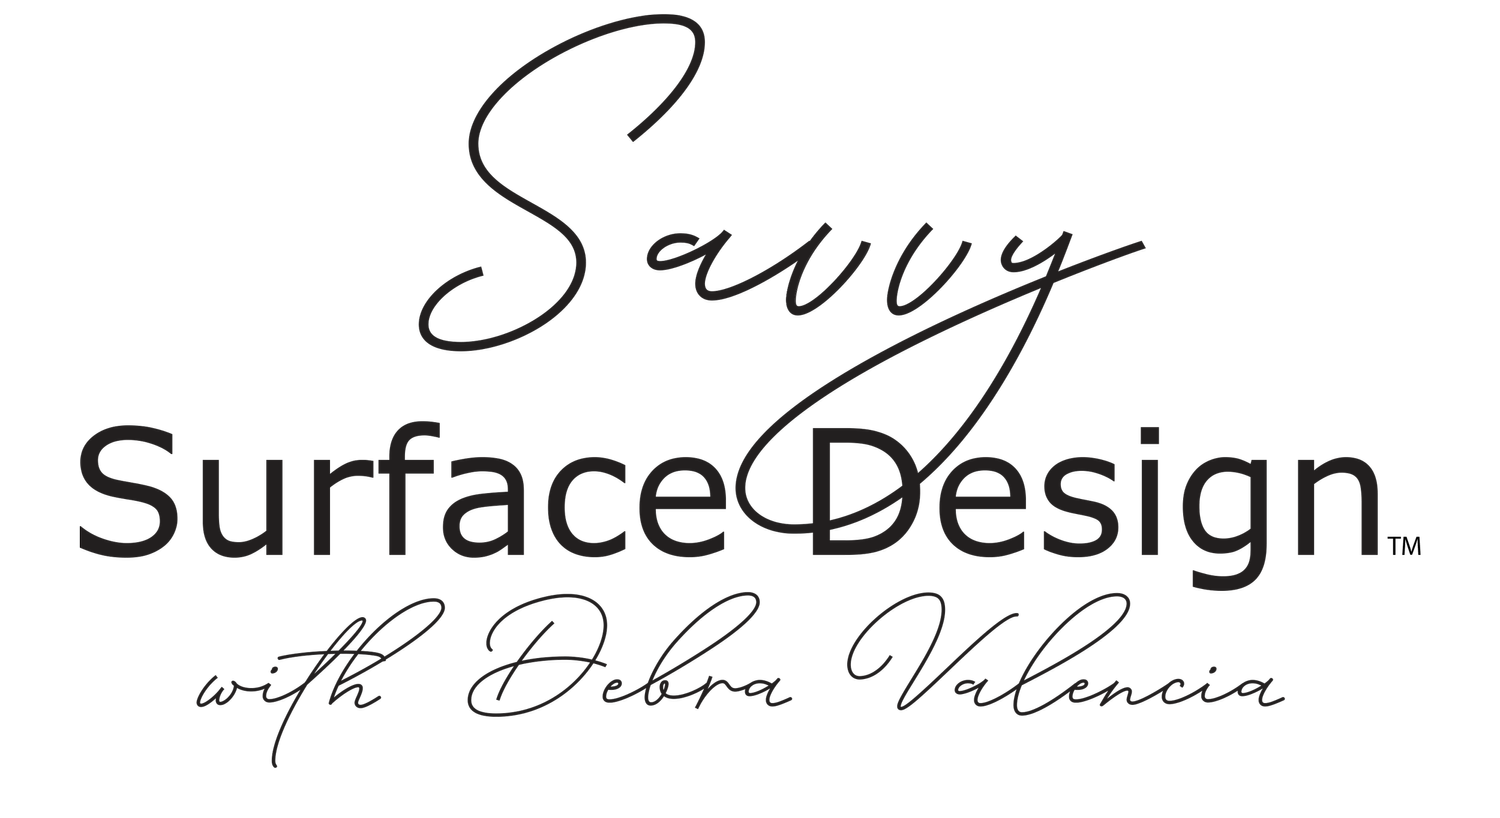 savvysurfacedesign.com